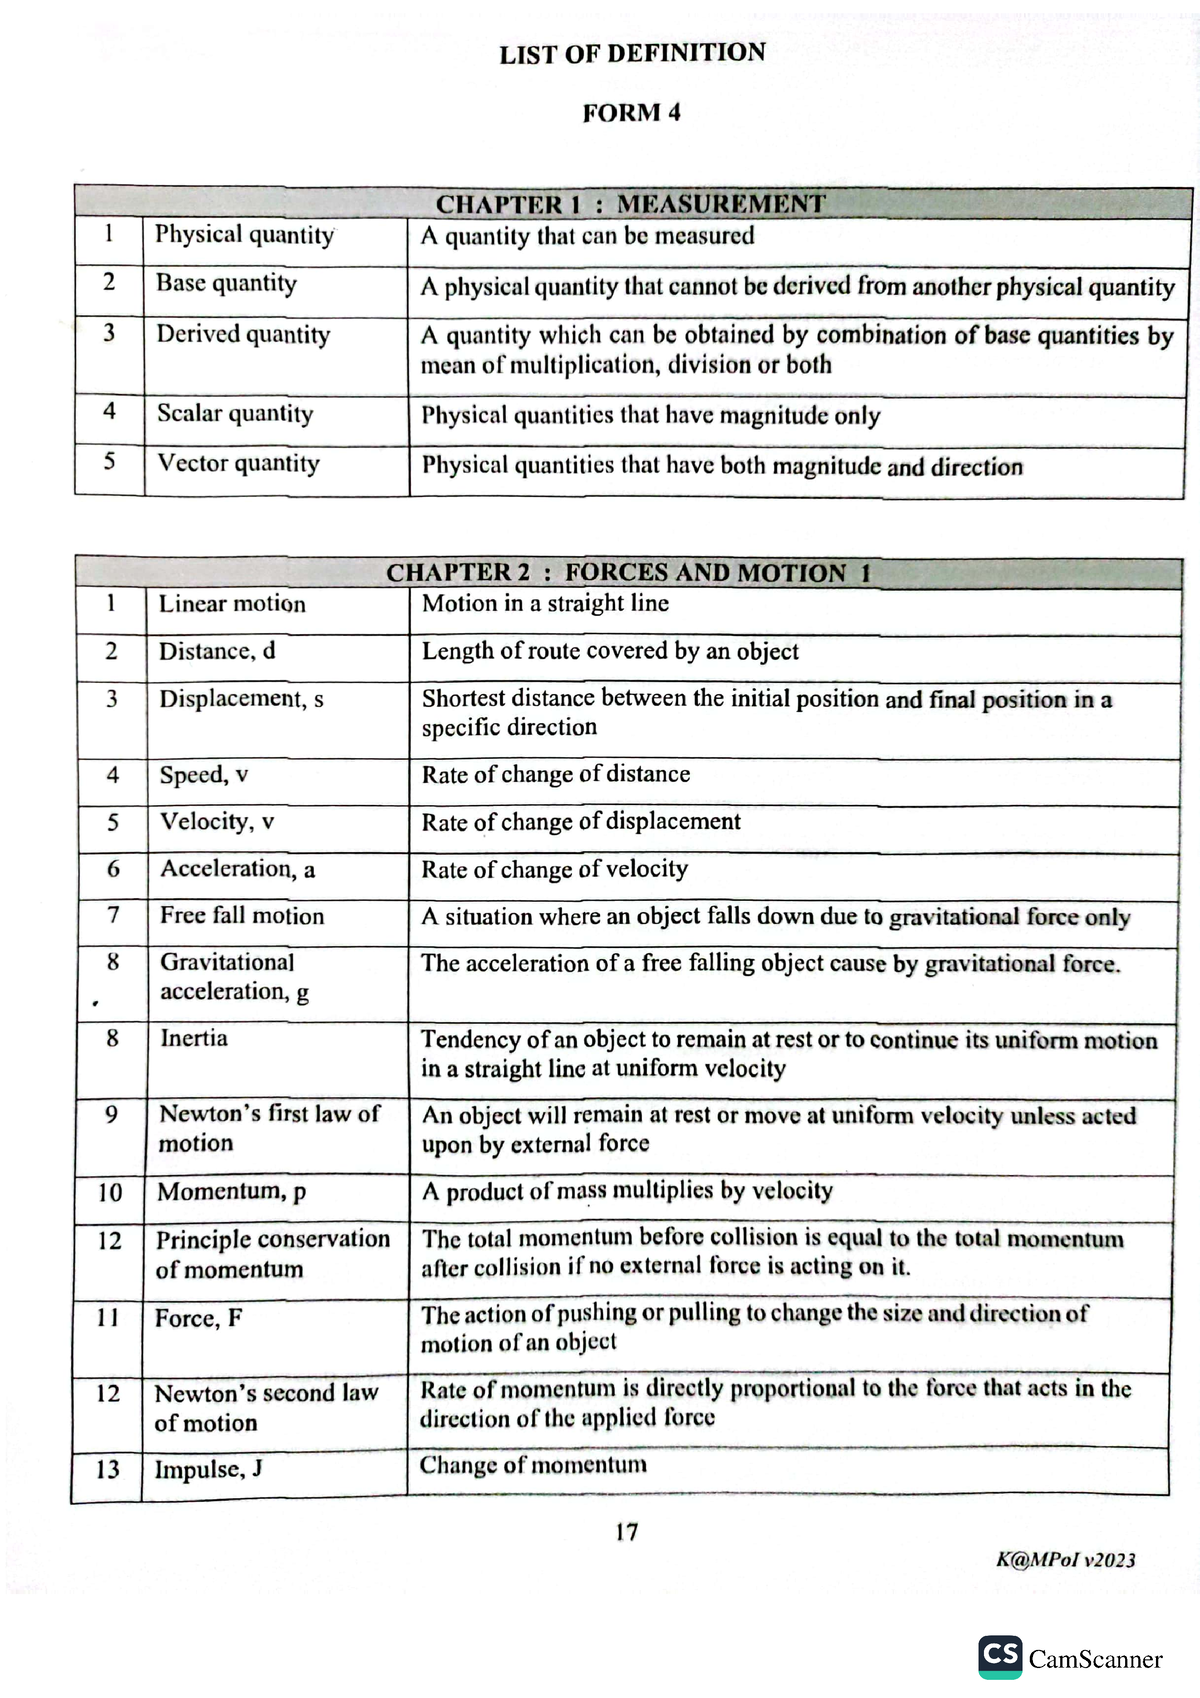 List of definition form 4 - Studocu